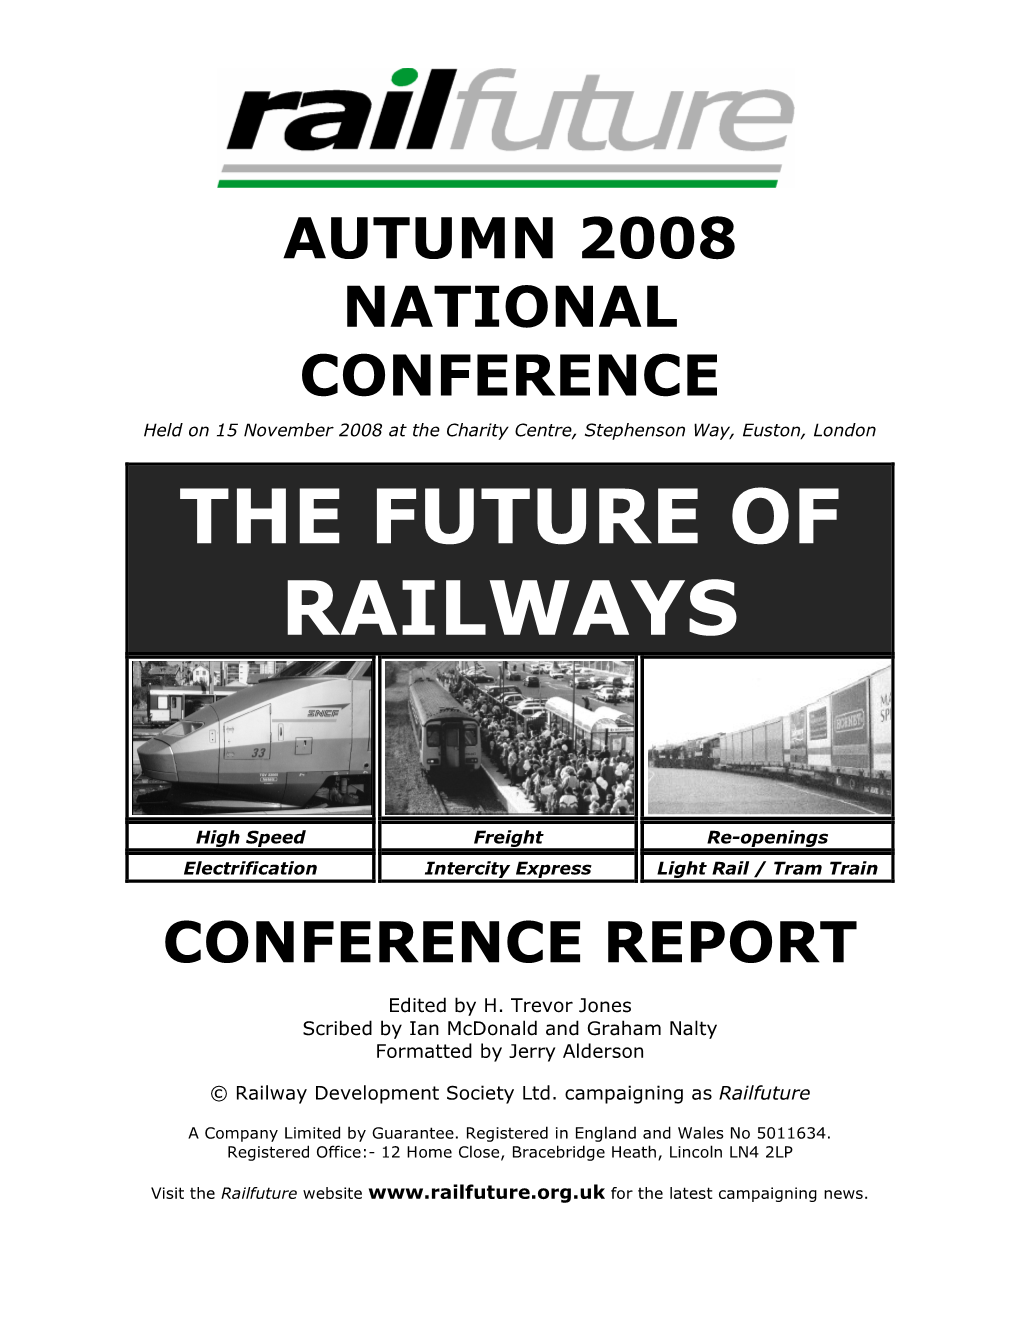 The Future of Railways